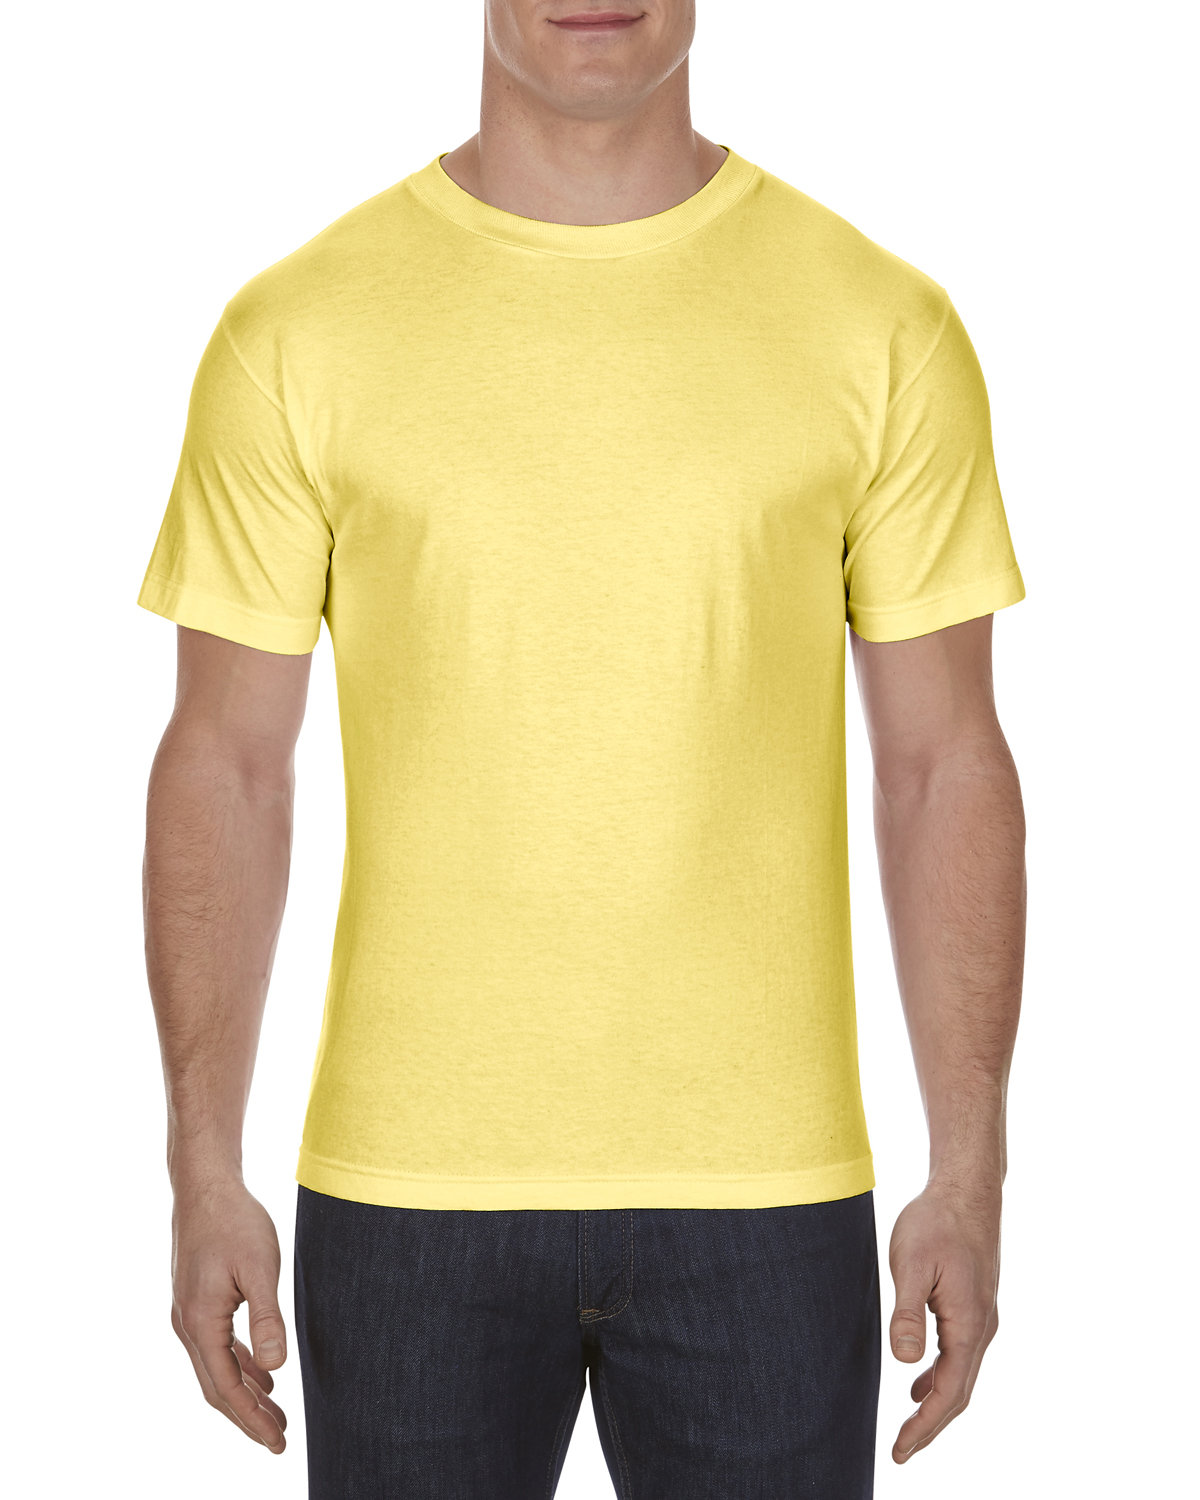 American Apparel Unisex Heavyweight Cotton T-Shirt banana 